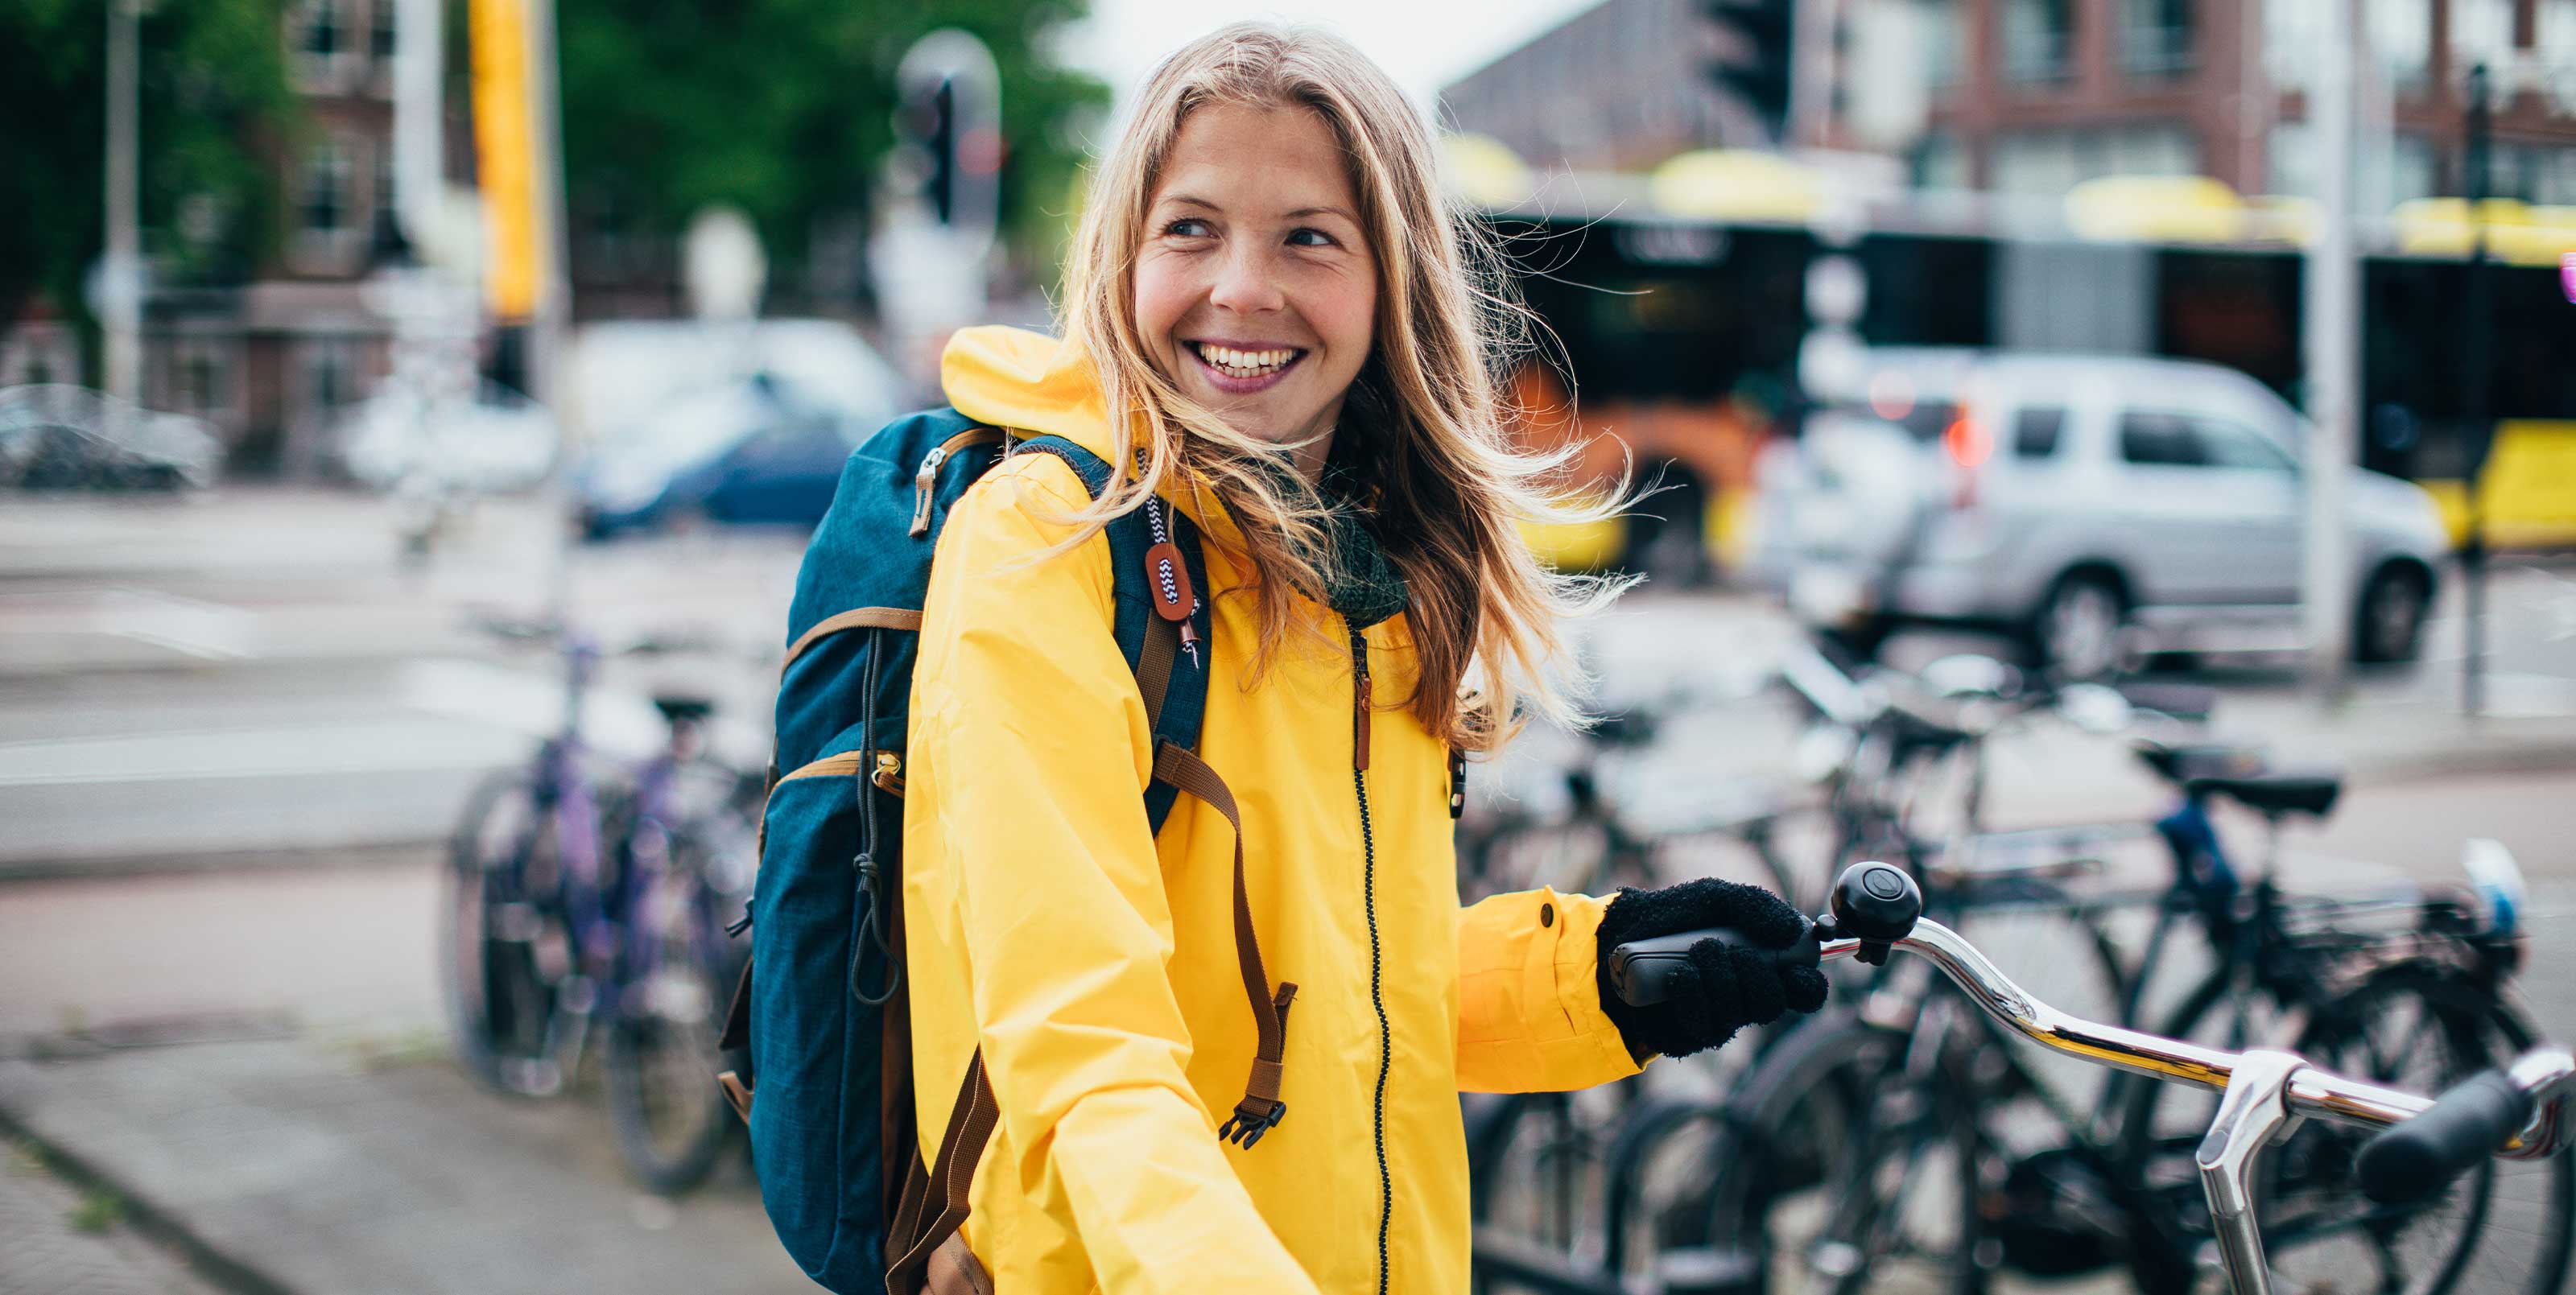 Smiling woman parking bicycle